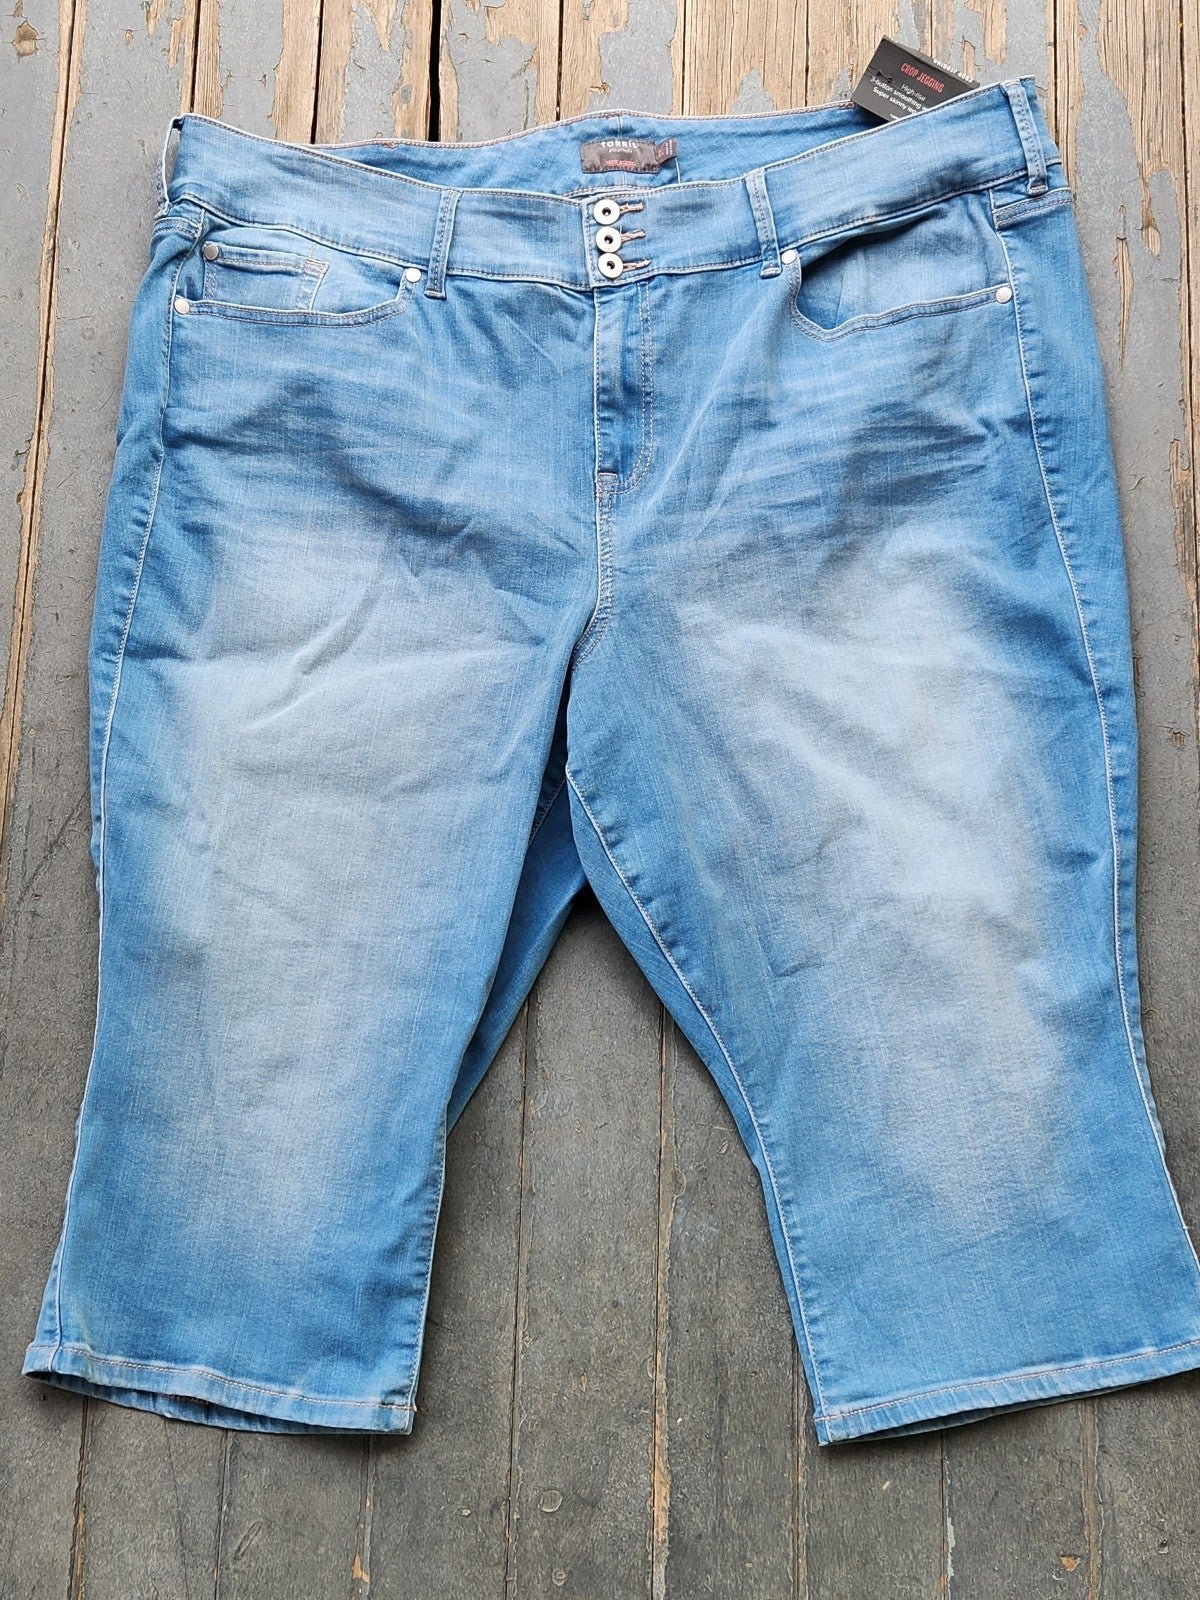 High quality Torrid crop jean leggins size 28 FssIhlBP2